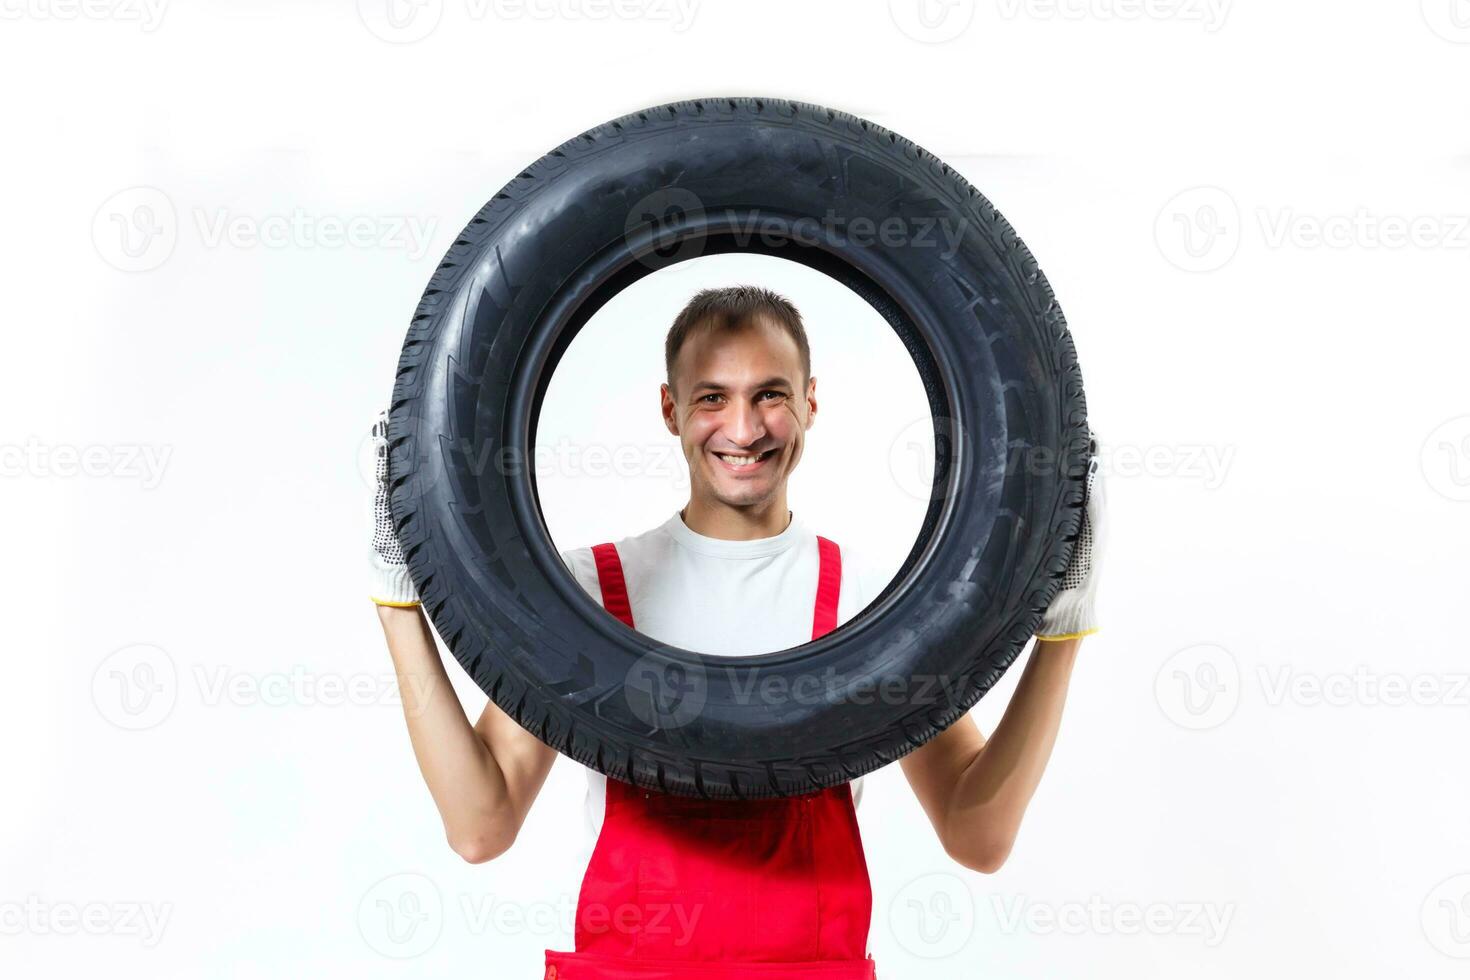 porträtt av leende manlig mekaniker innehav däck på vit bakgrund foto